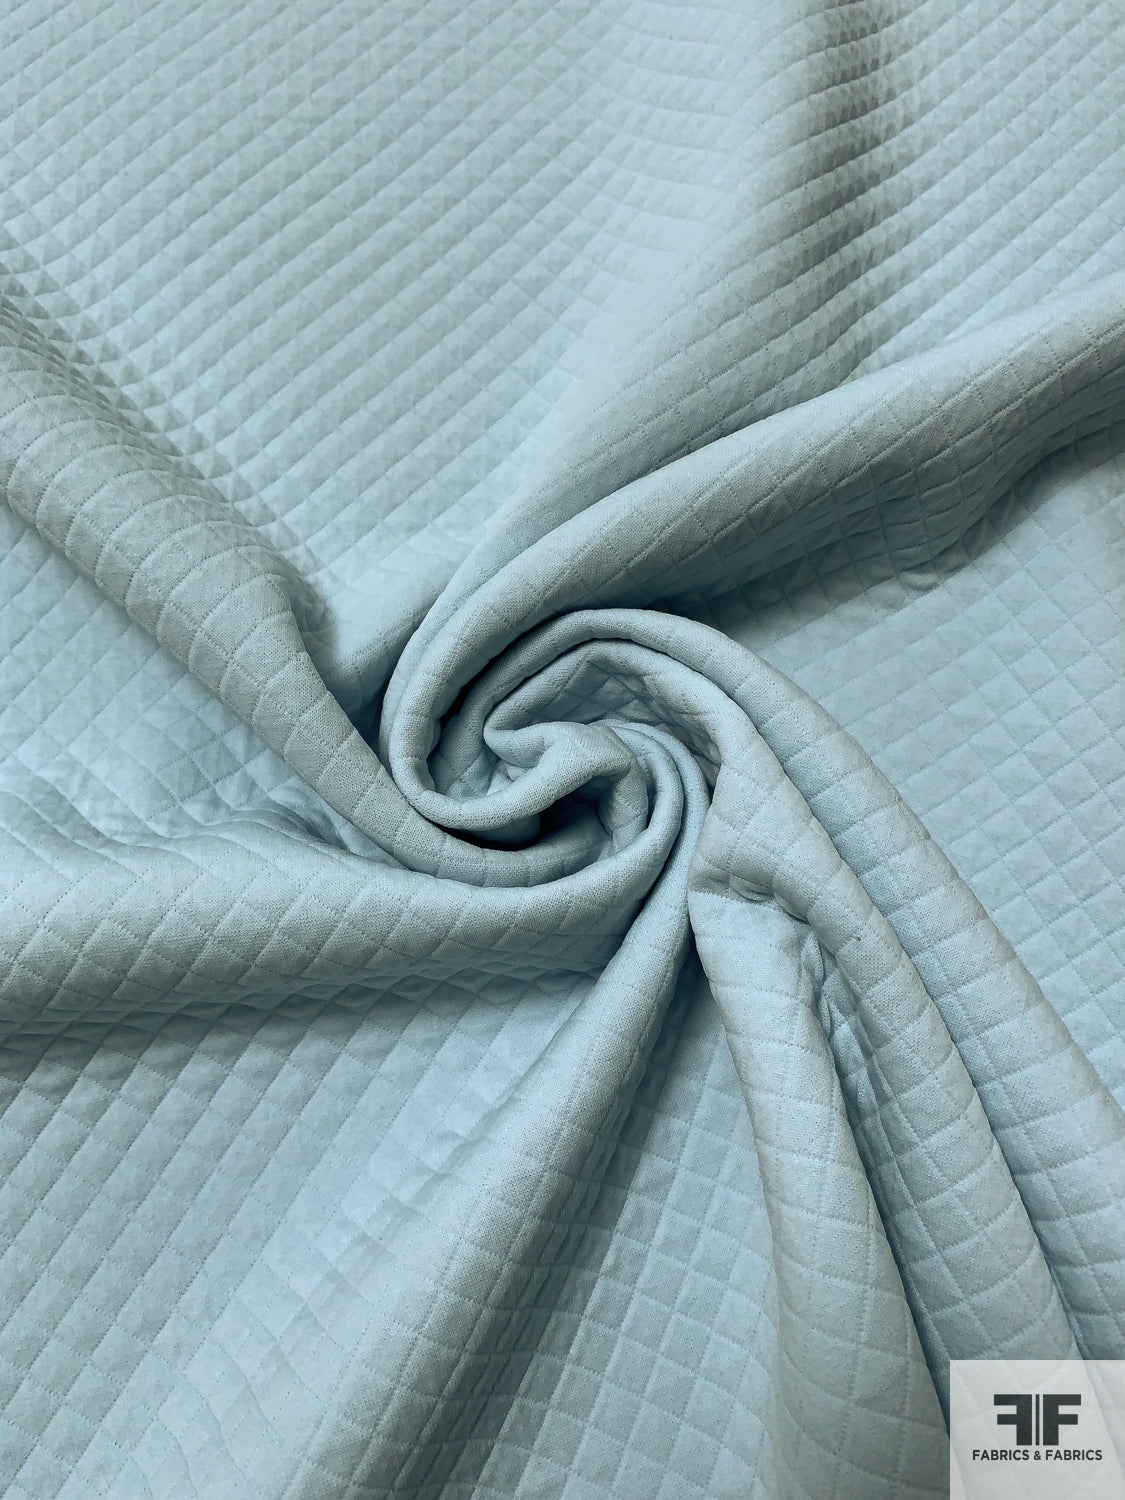 Lela Rose Diamond Grid Quilt-Like Polyester Knit - Light Aqua Sky